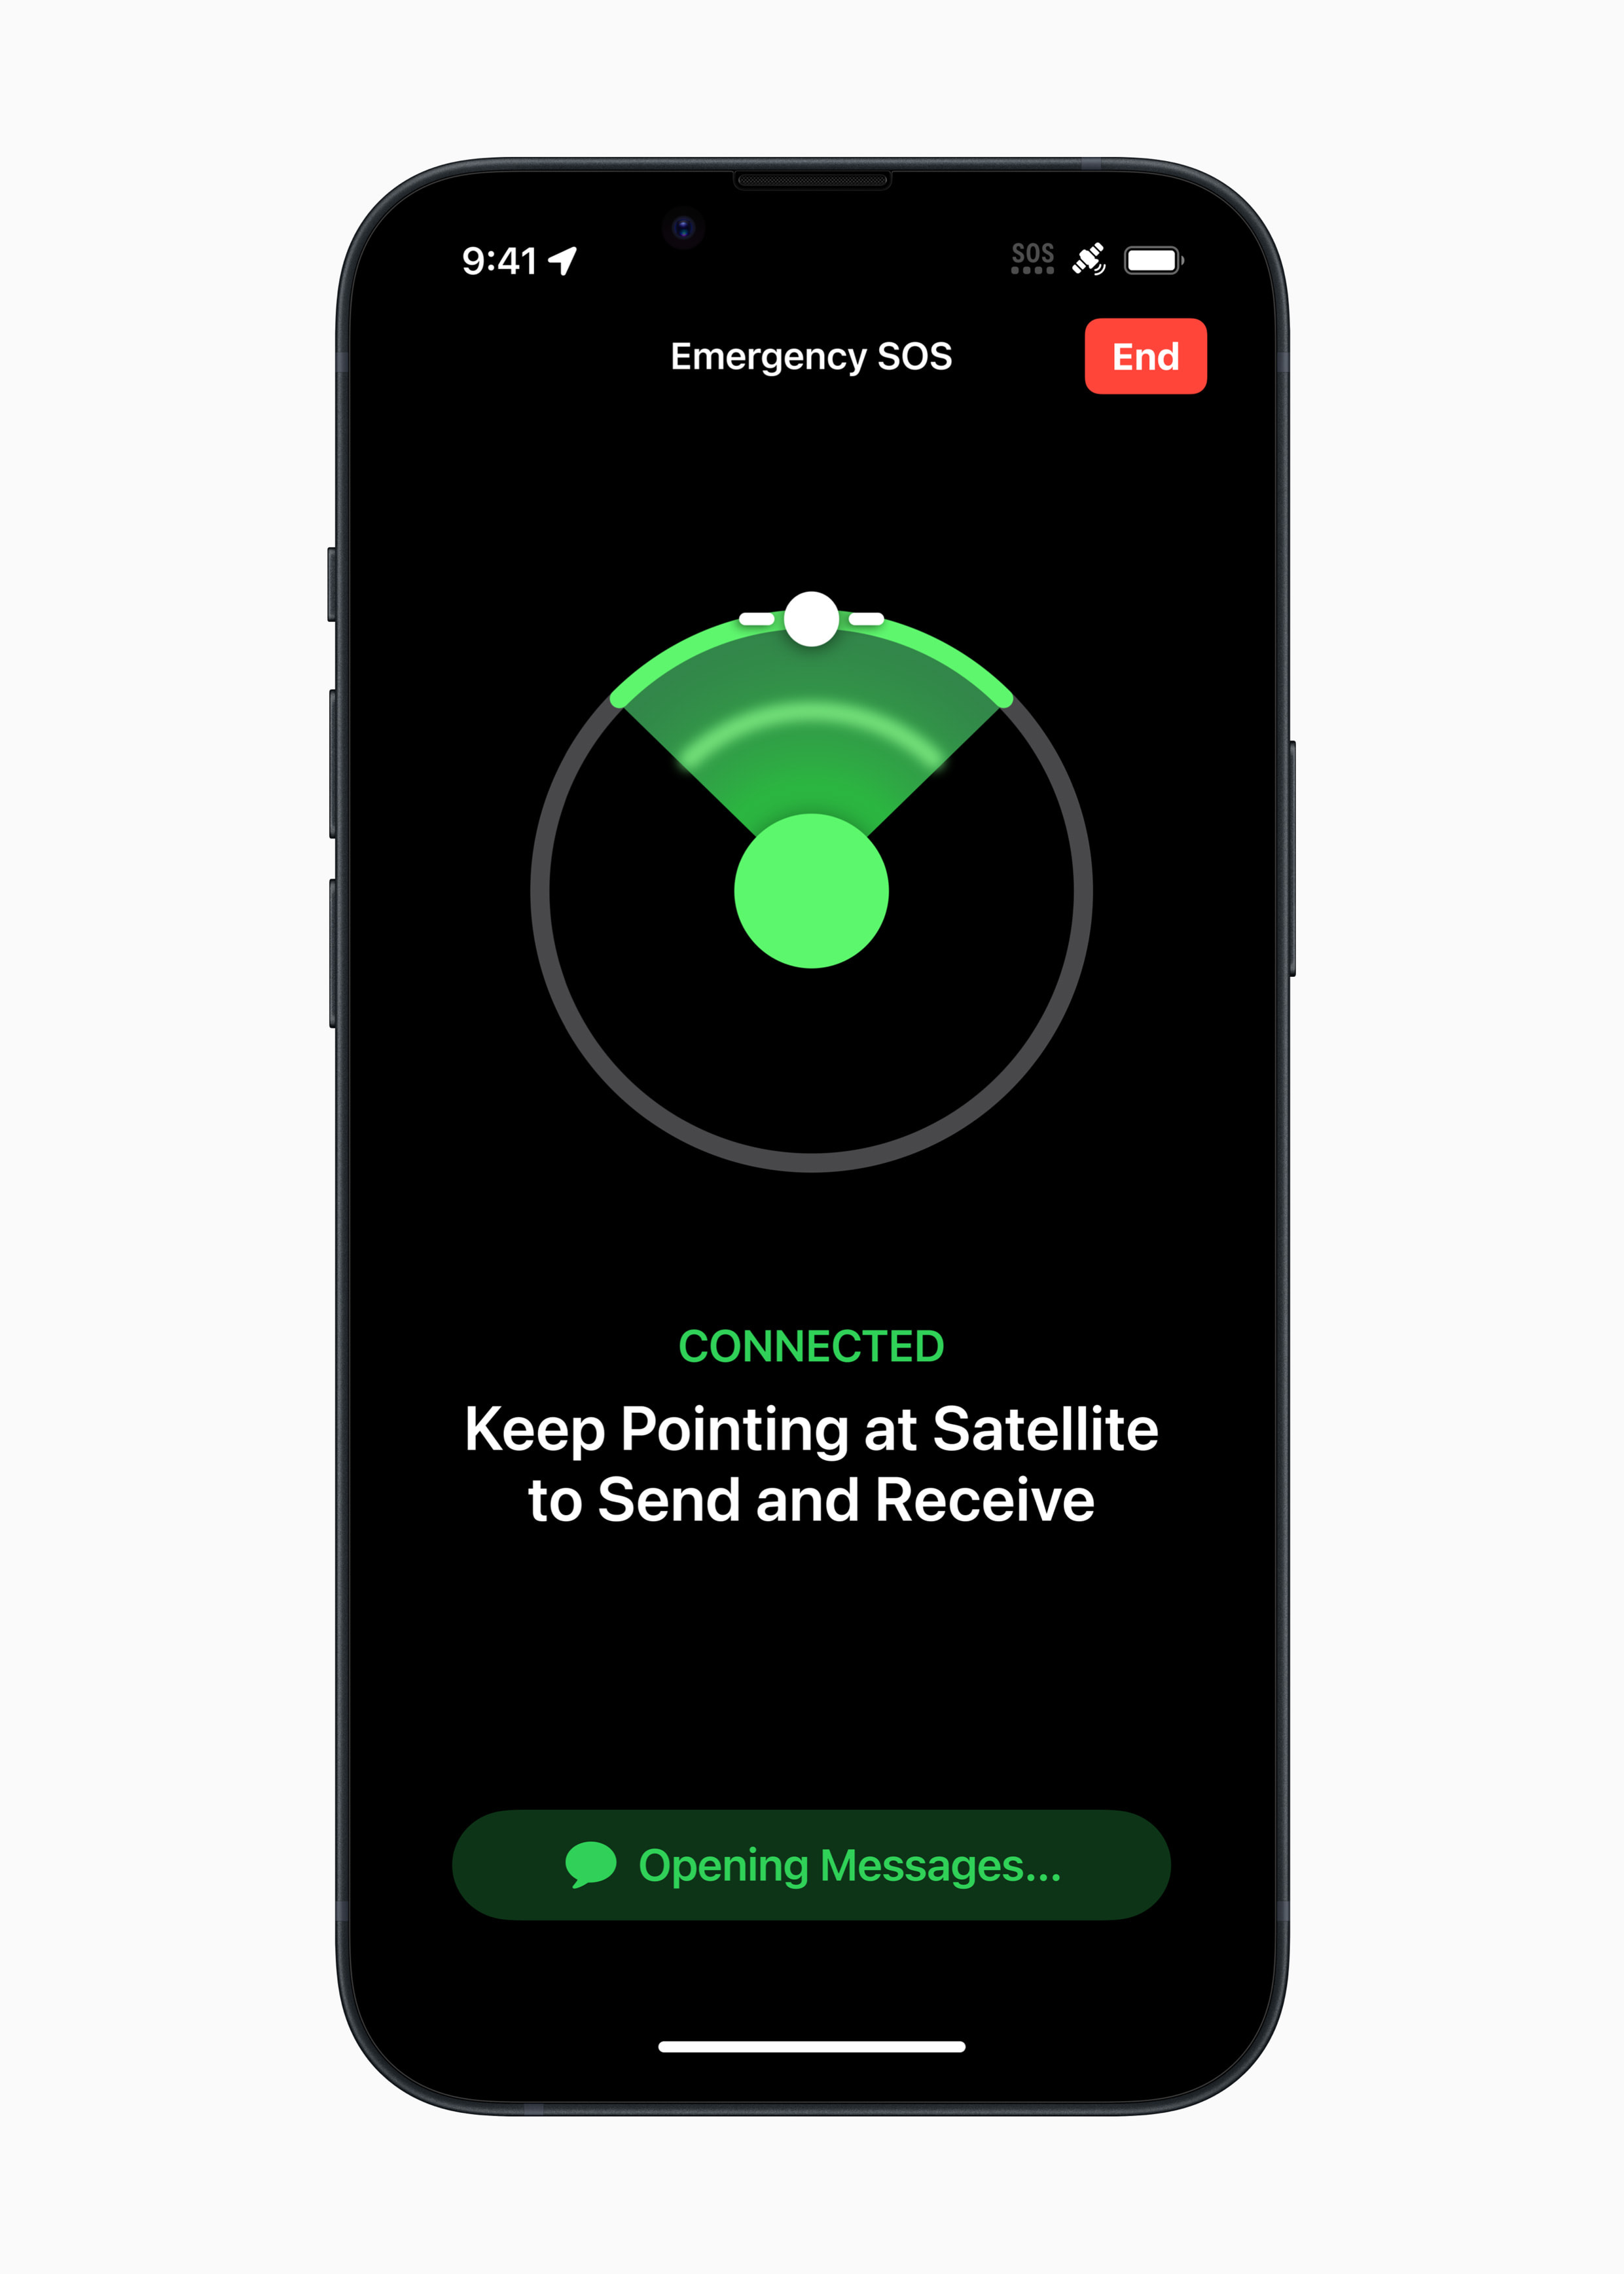 Emergency SOS via satellite available in Australia, New Zealand